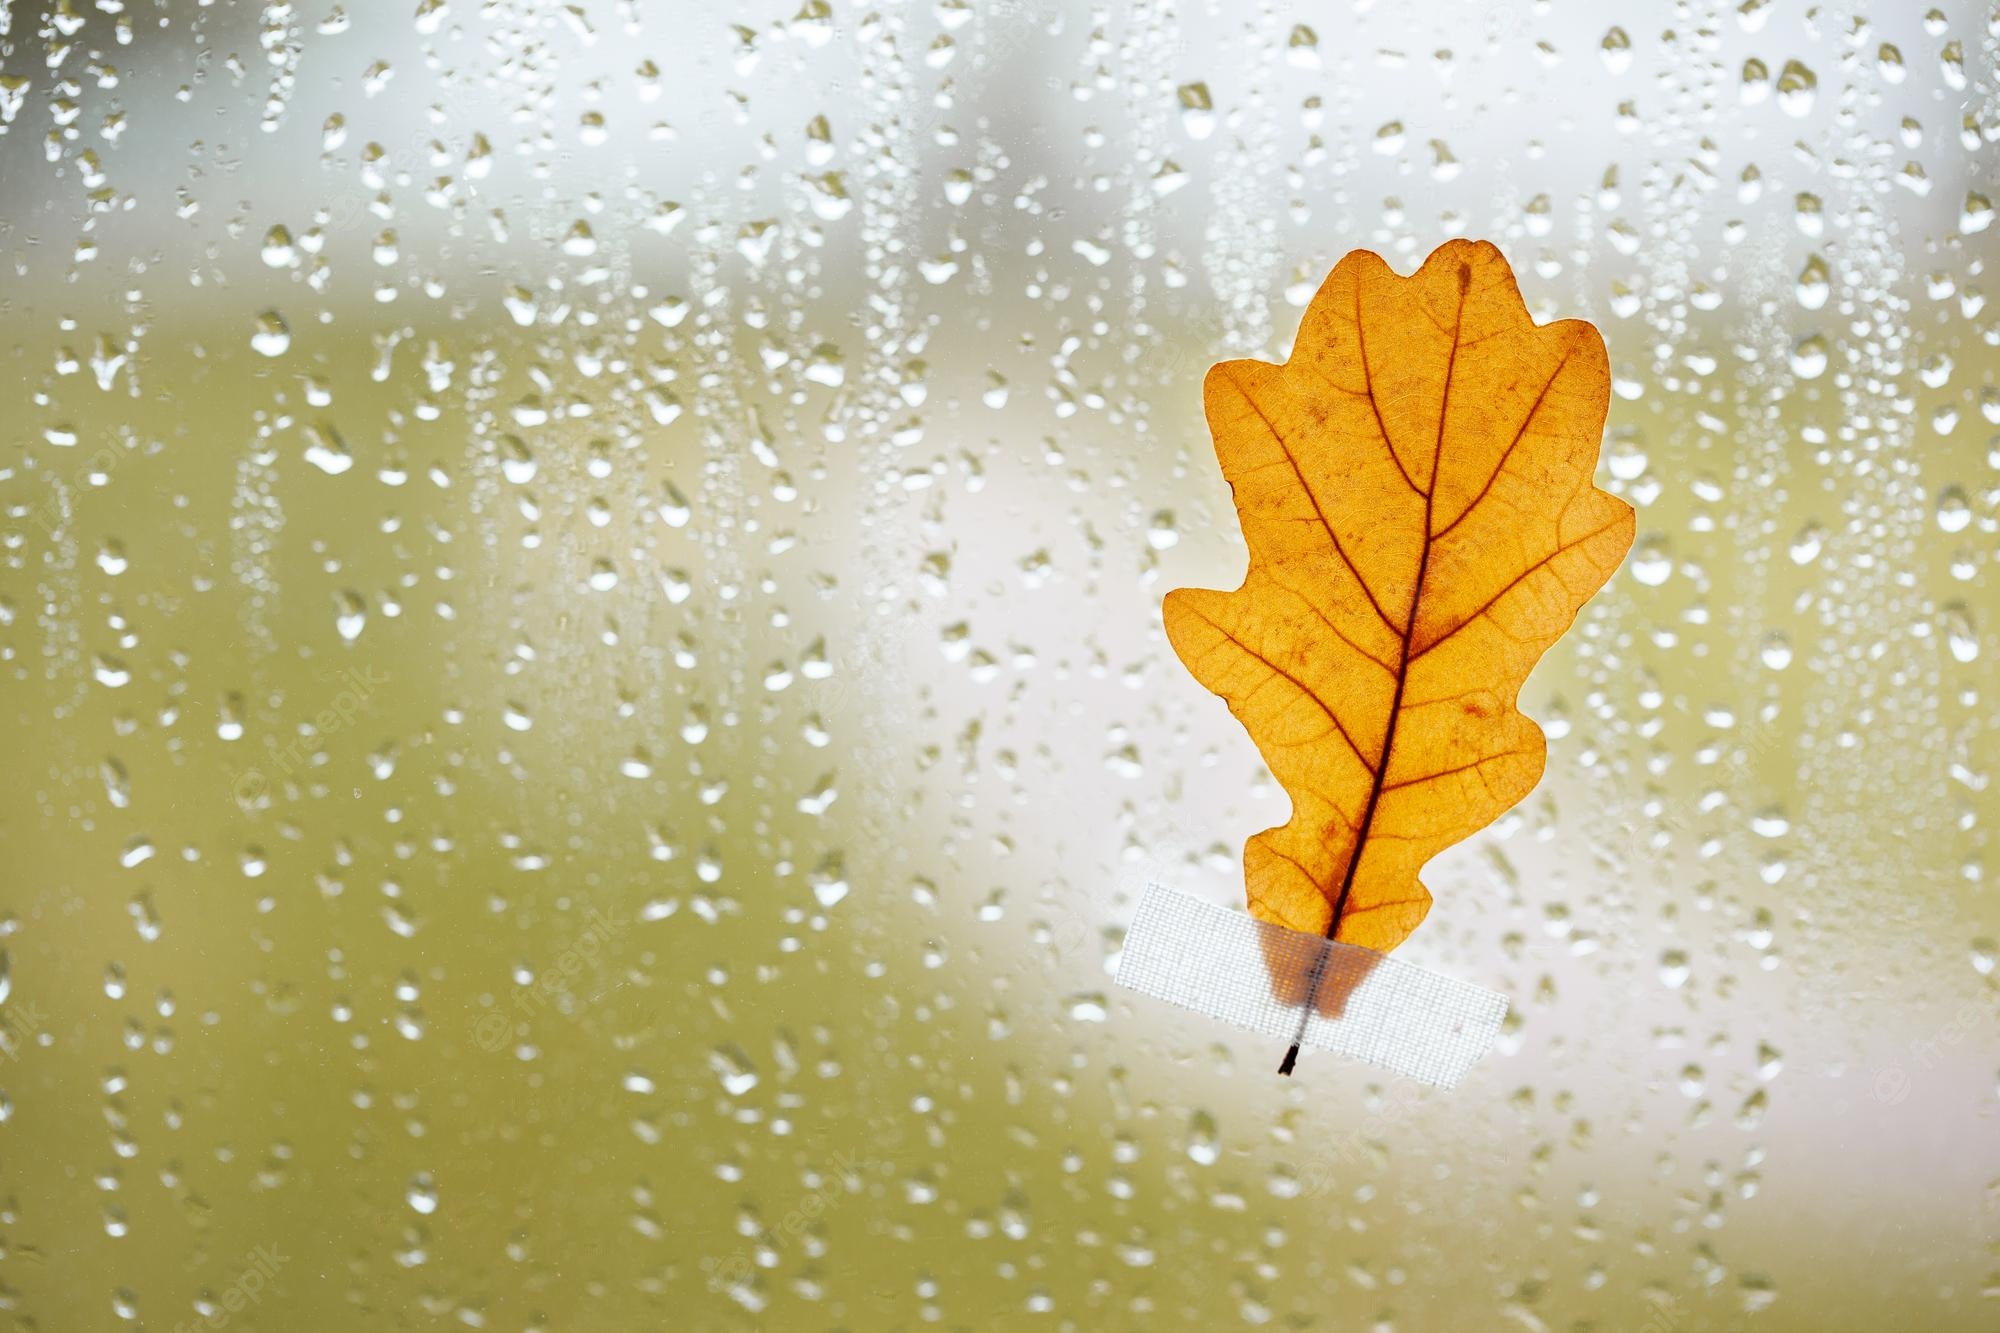 Premium Photo. Orange oak leaf on window glass with rain drops in the autumn rainy day season is fall